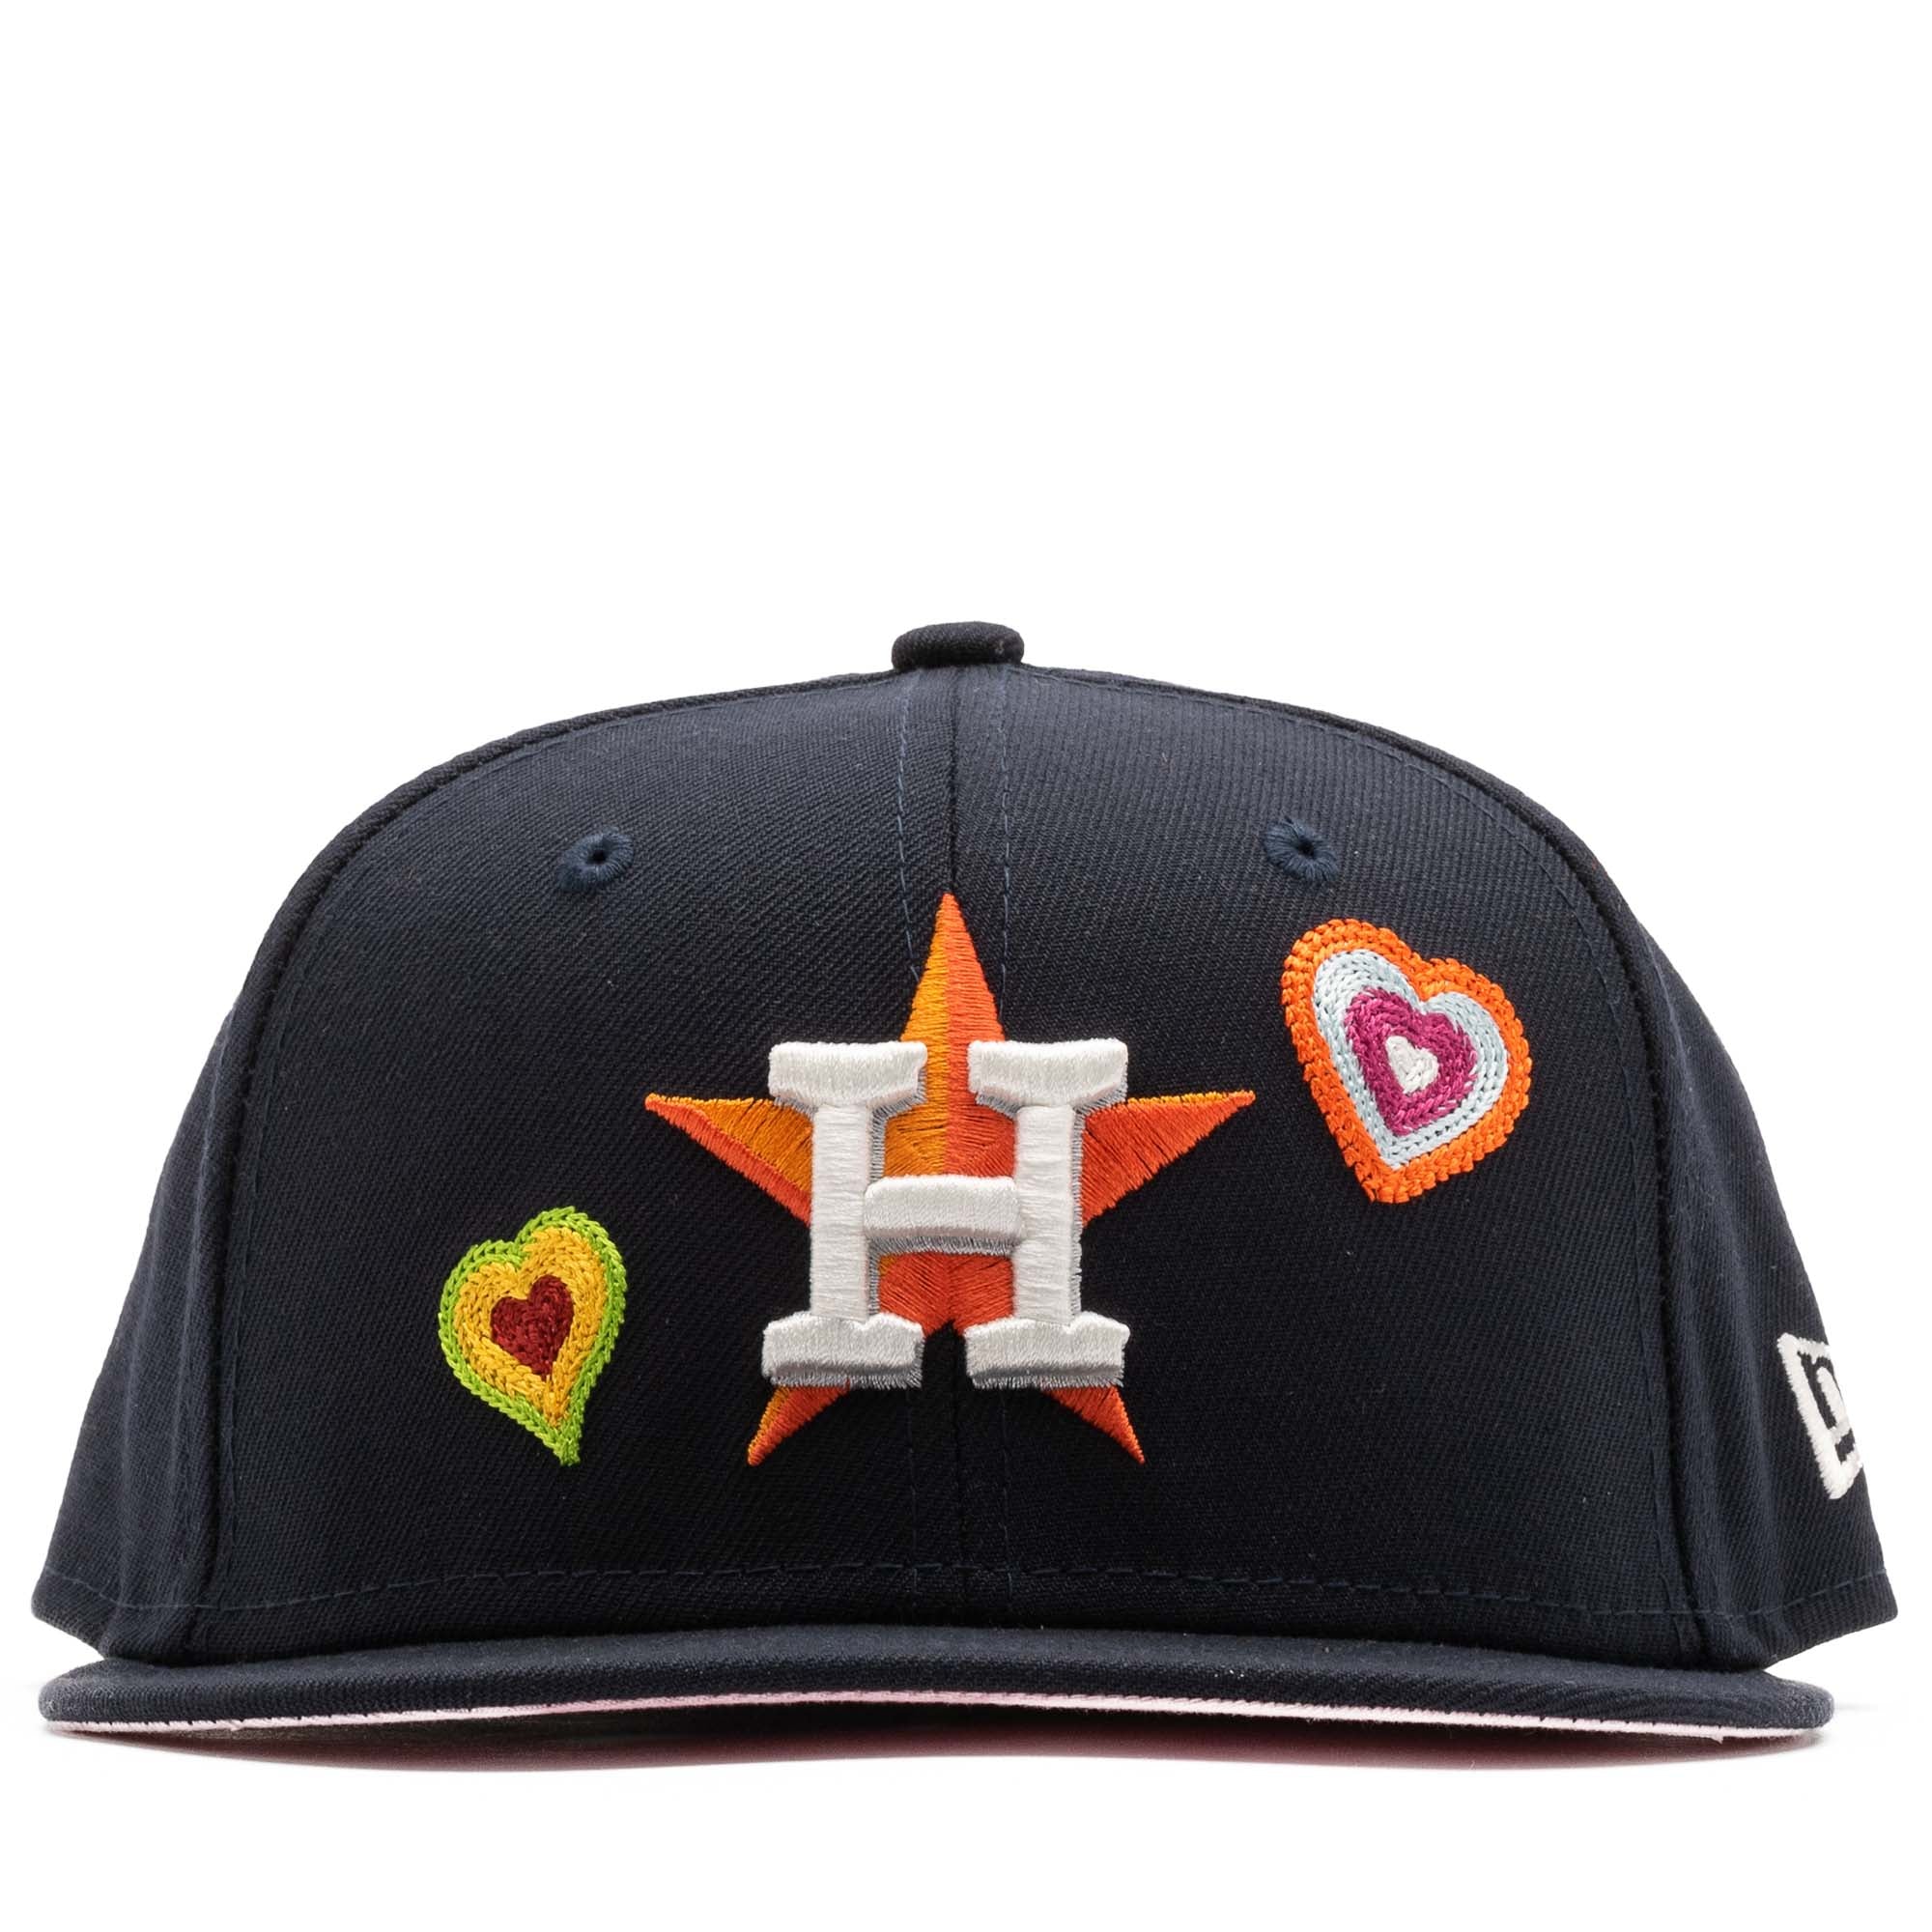 new era houston astros hat